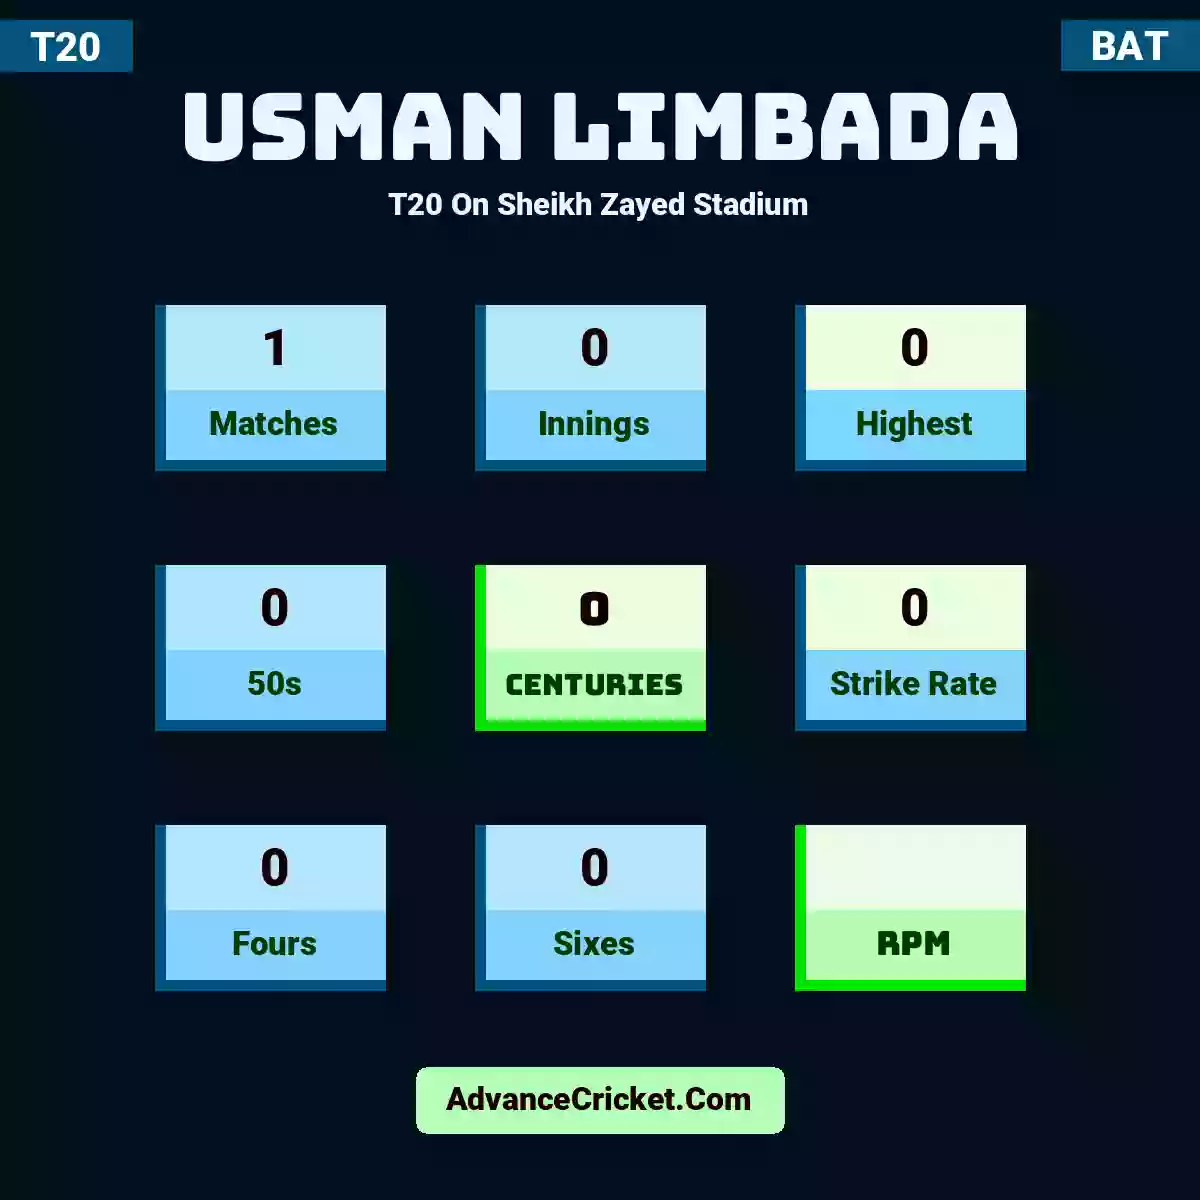 Usman Limbada T20  On Sheikh Zayed Stadium, Usman Limbada played 1 matches, scored 0 runs as highest, 0 half-centuries, and 0 centuries, with a strike rate of 0. U.Limbada hit 0 fours and 0 sixes.